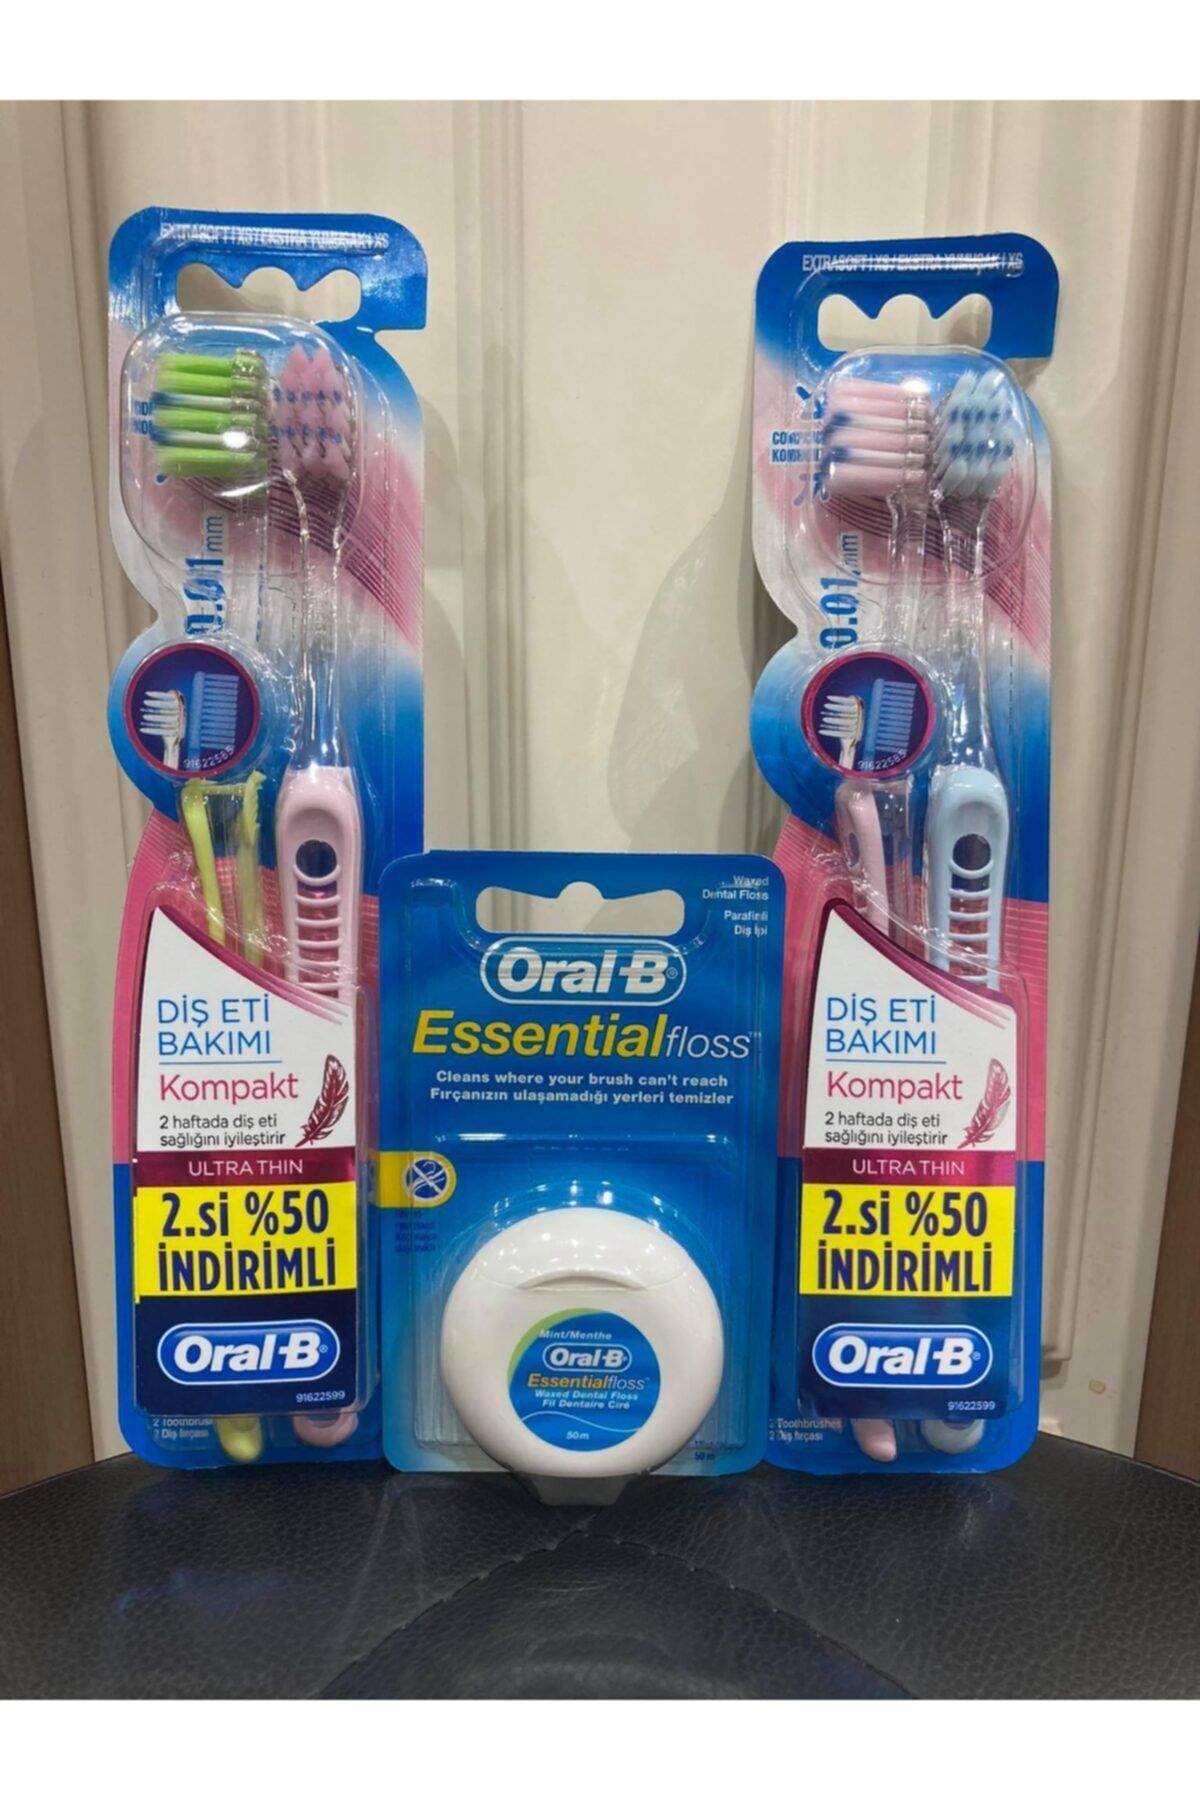 Oral-B Essential Floss Diş Ipi Diş Fırçası Ultrathin Kompakt Hassas 2'li Fırsat Paketi